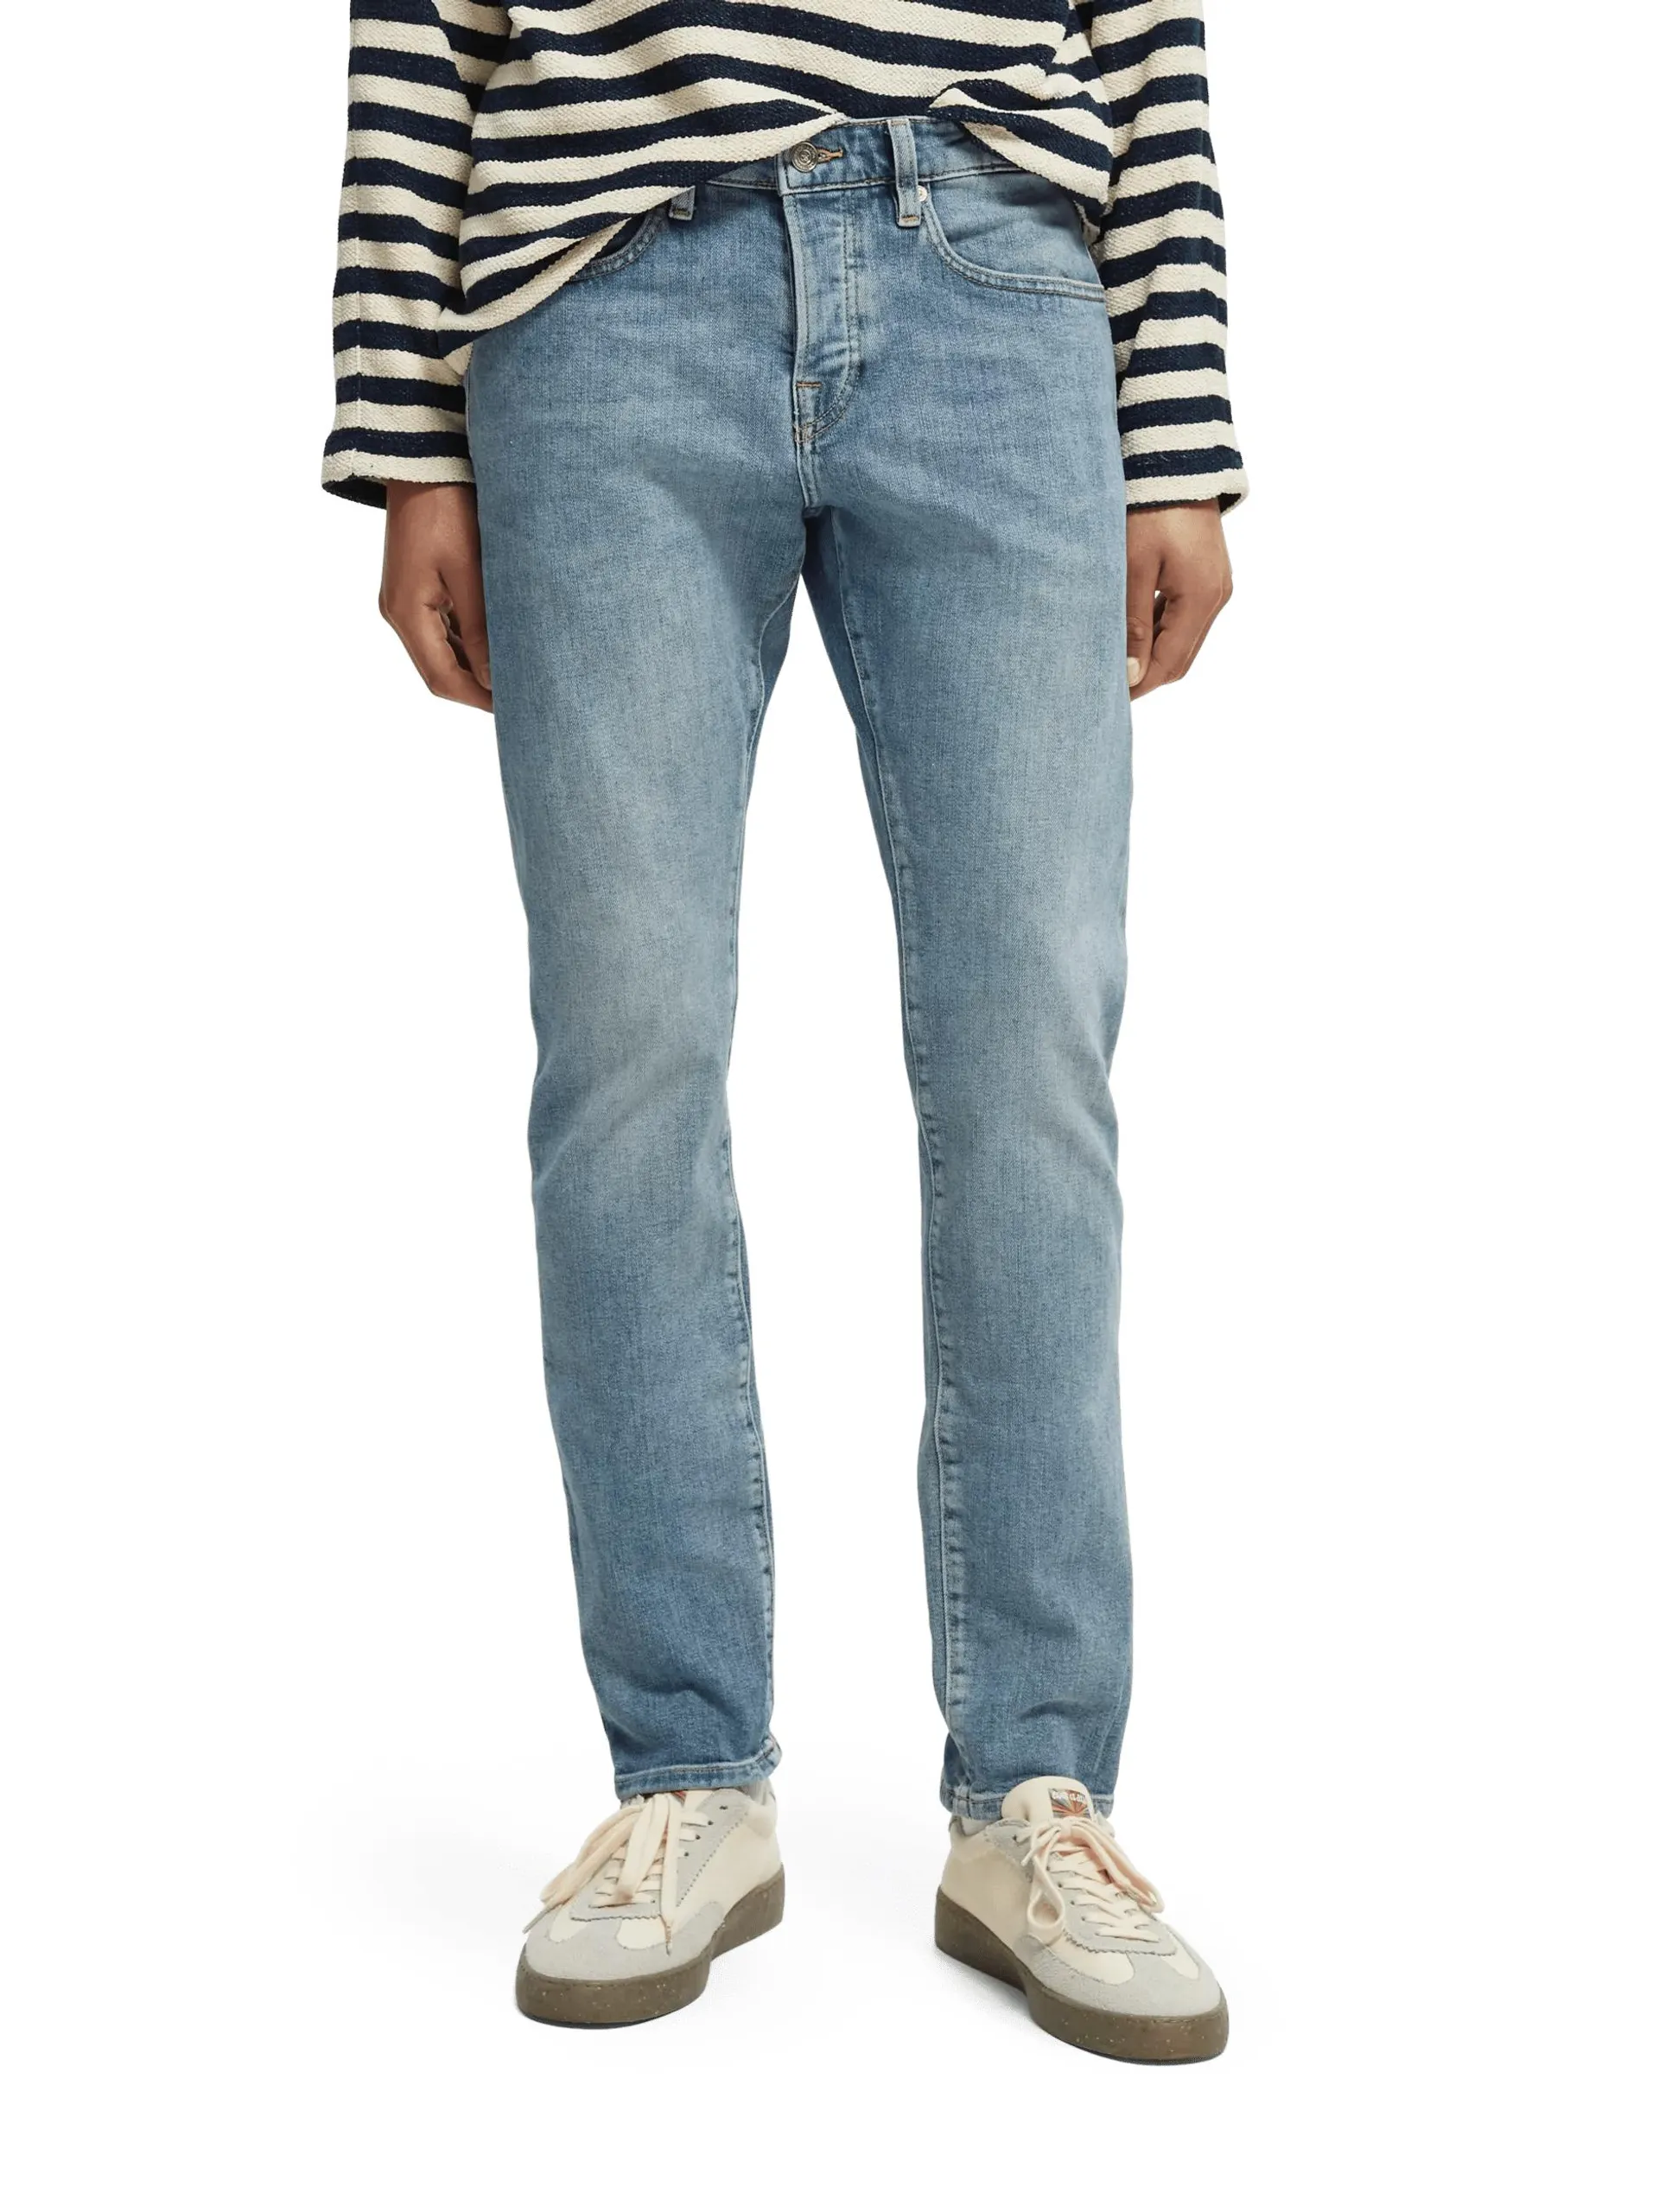 The Ralston regular slim fit jeans - Aqua Blue